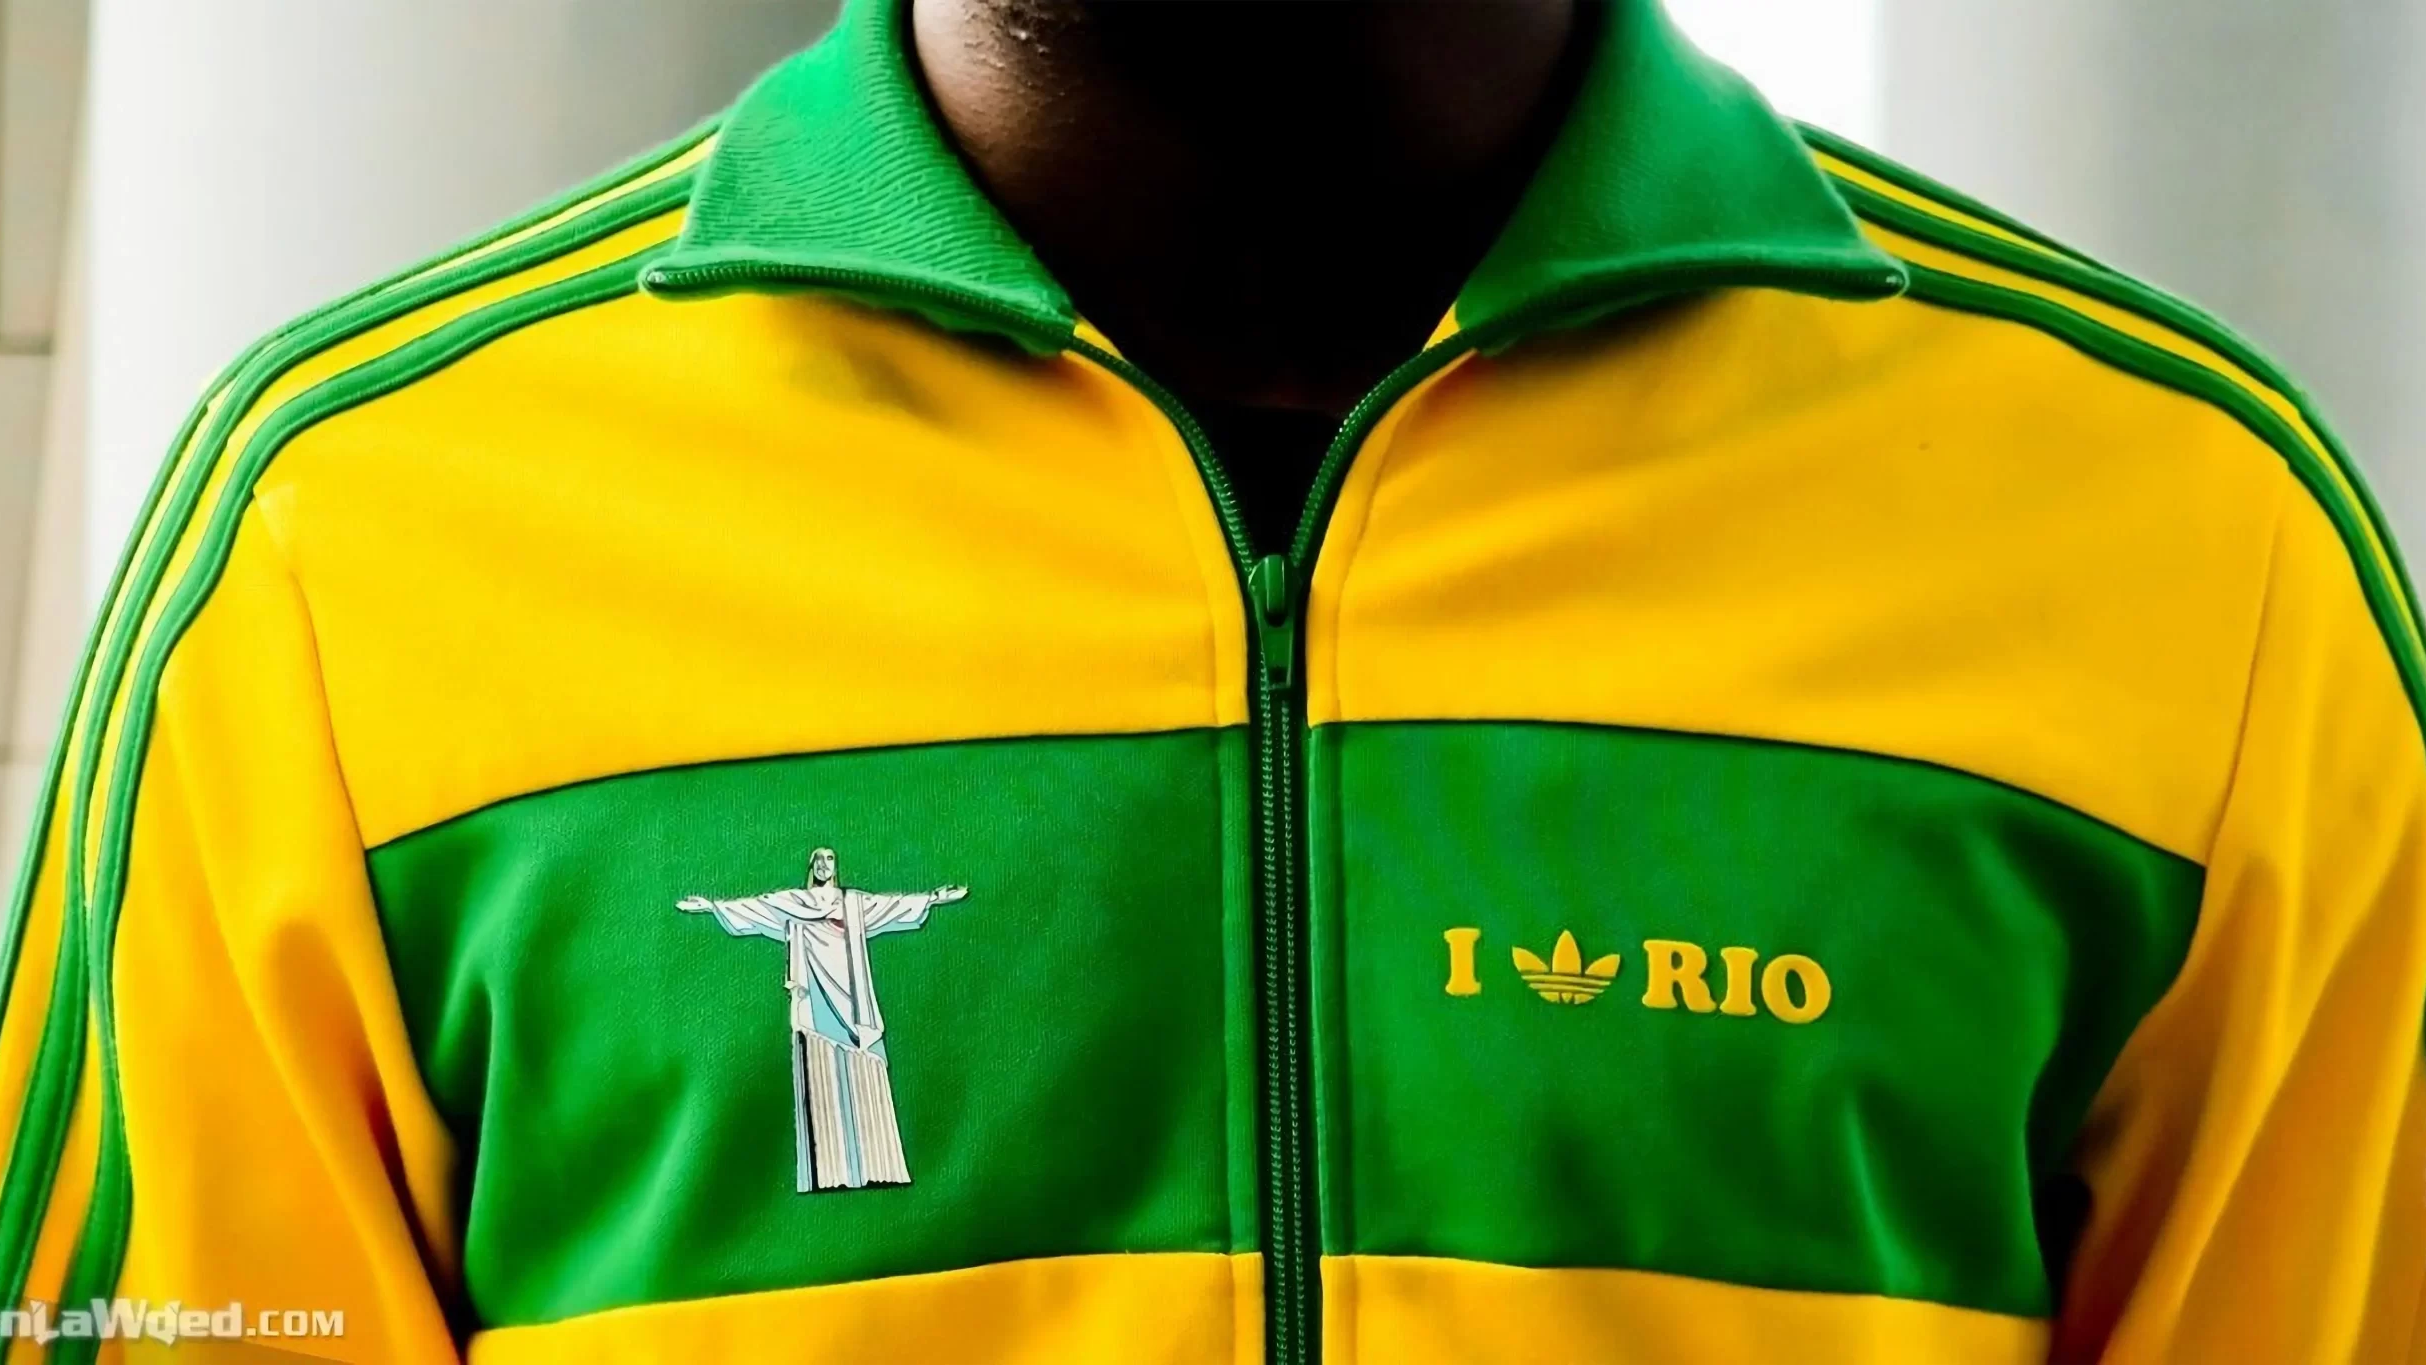 Men’s 2006 Rio de Janeiro TT-Two by Adidas Originals: Tremendous (EnLawded.com file #lmchk90424ip2y122323kg9st)